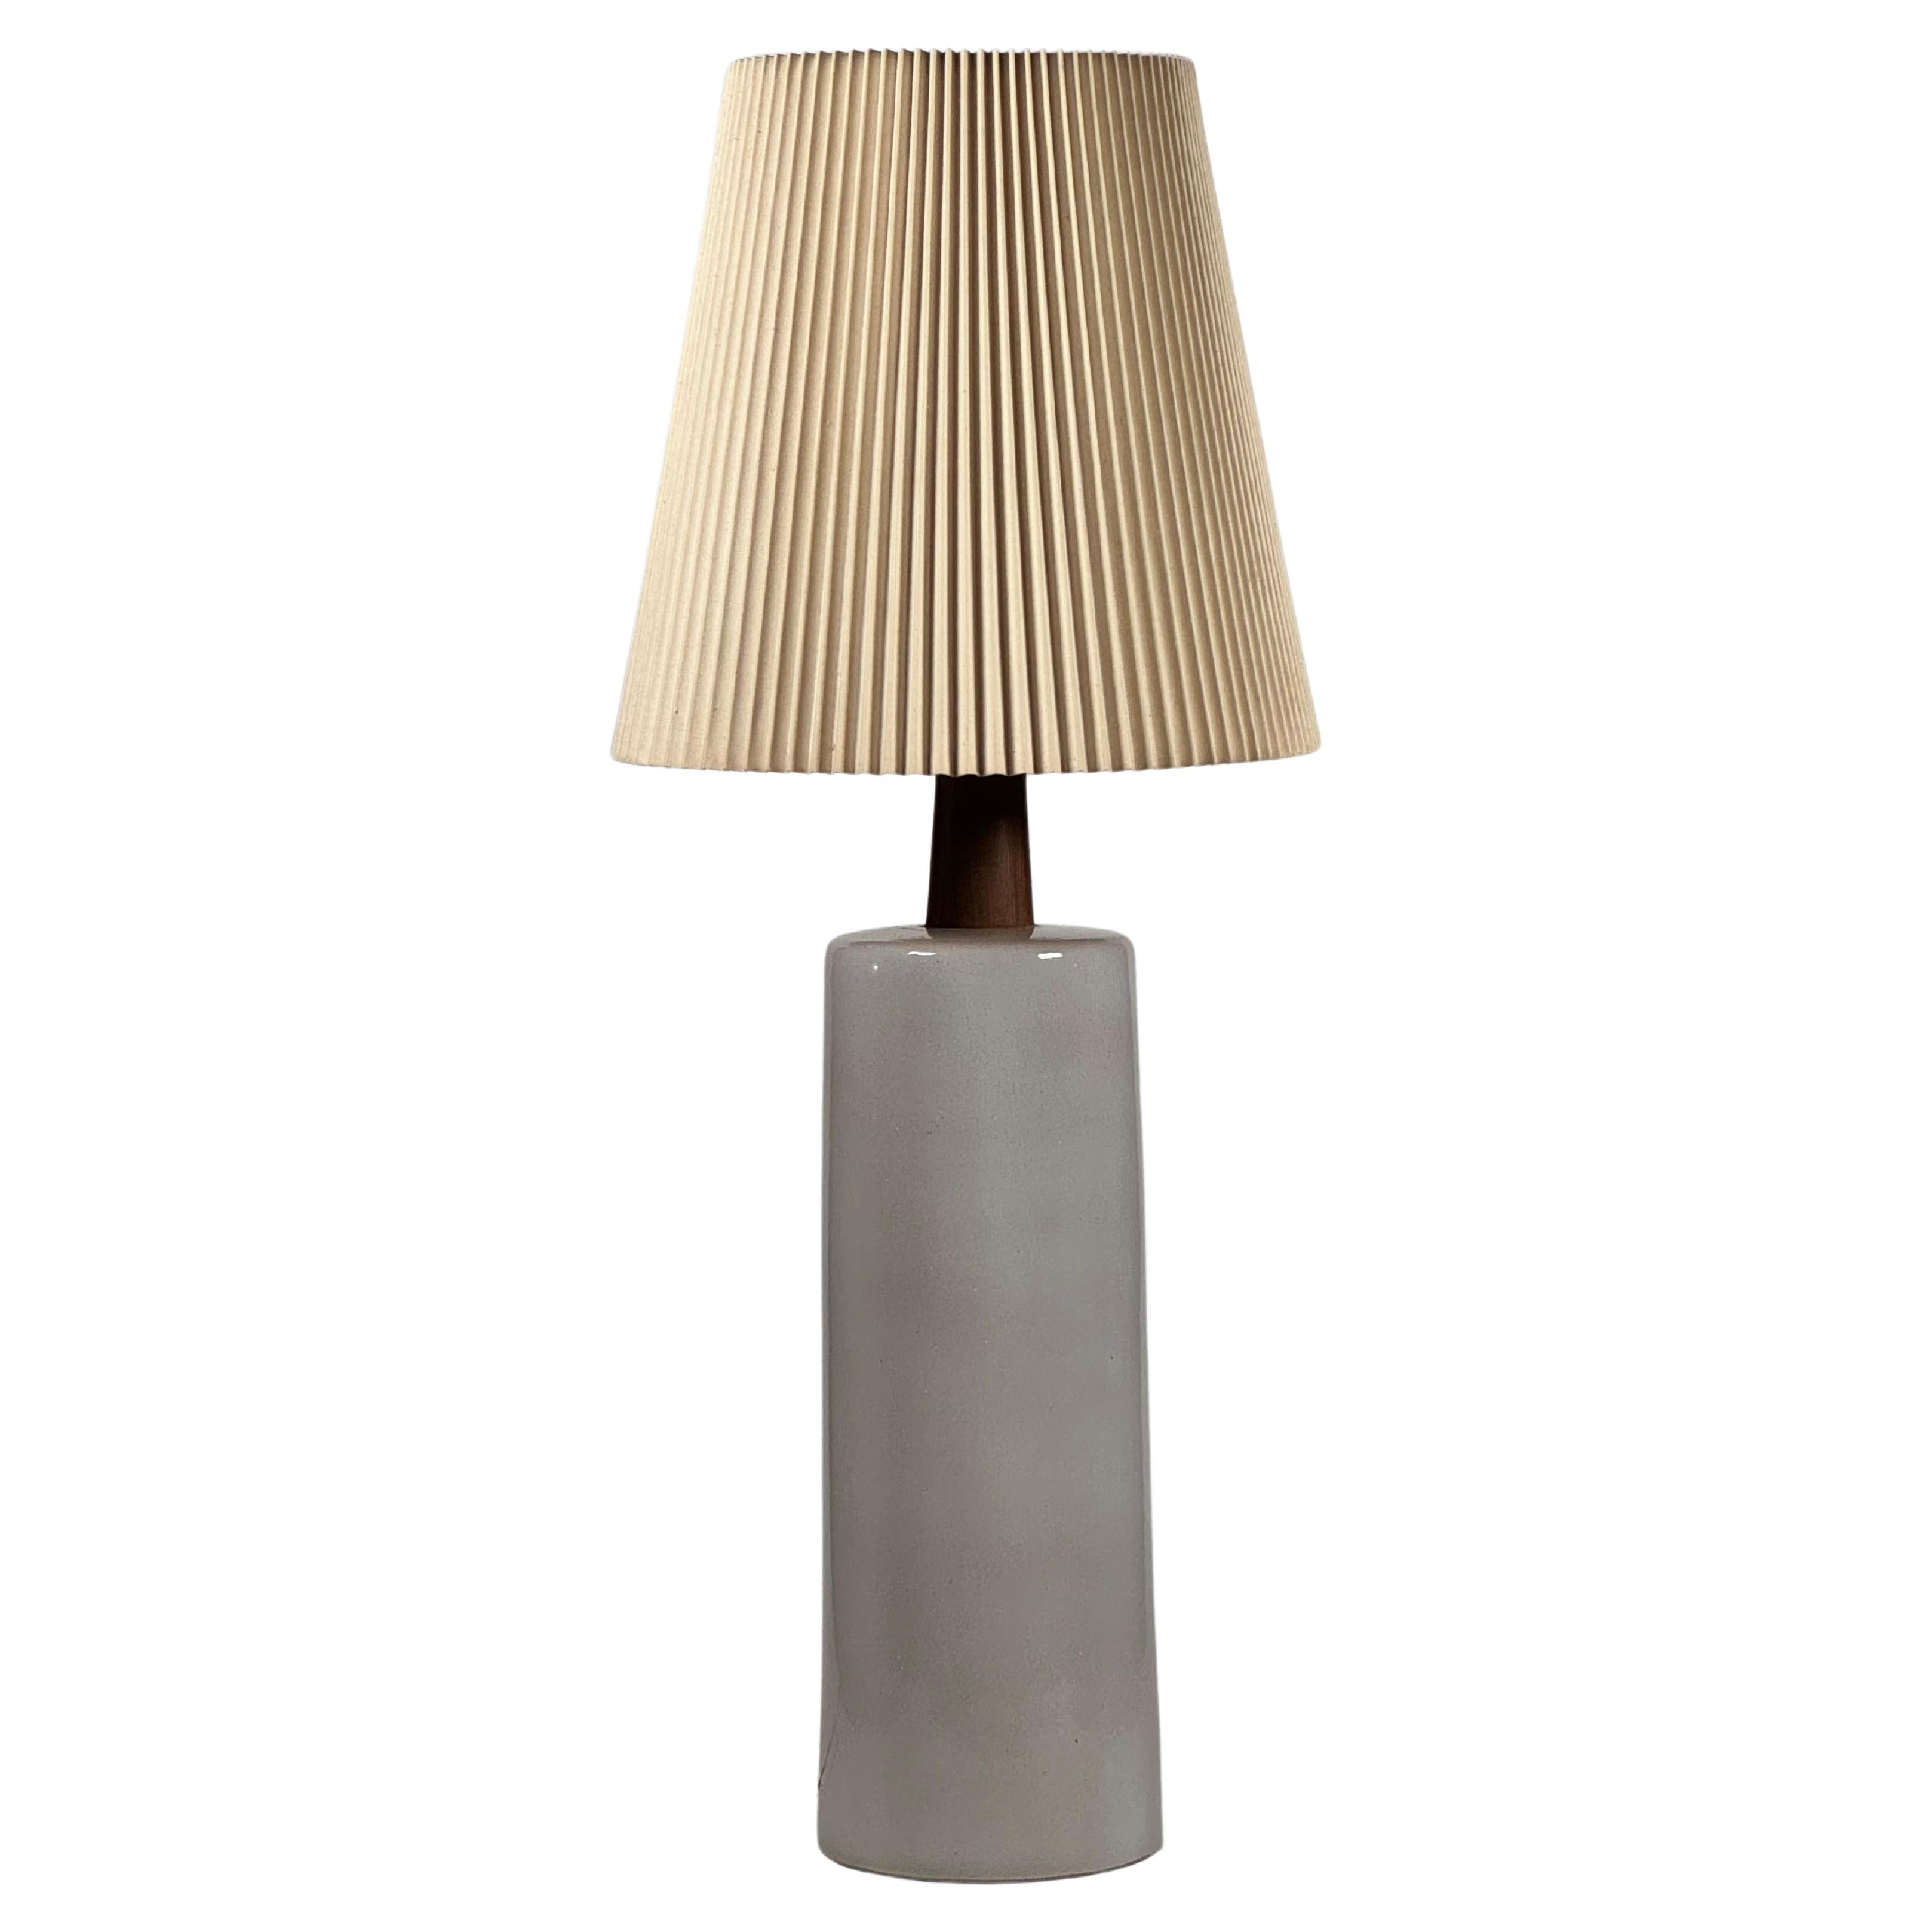 Large Scale Martz Ceramic Table Lamp For Sale